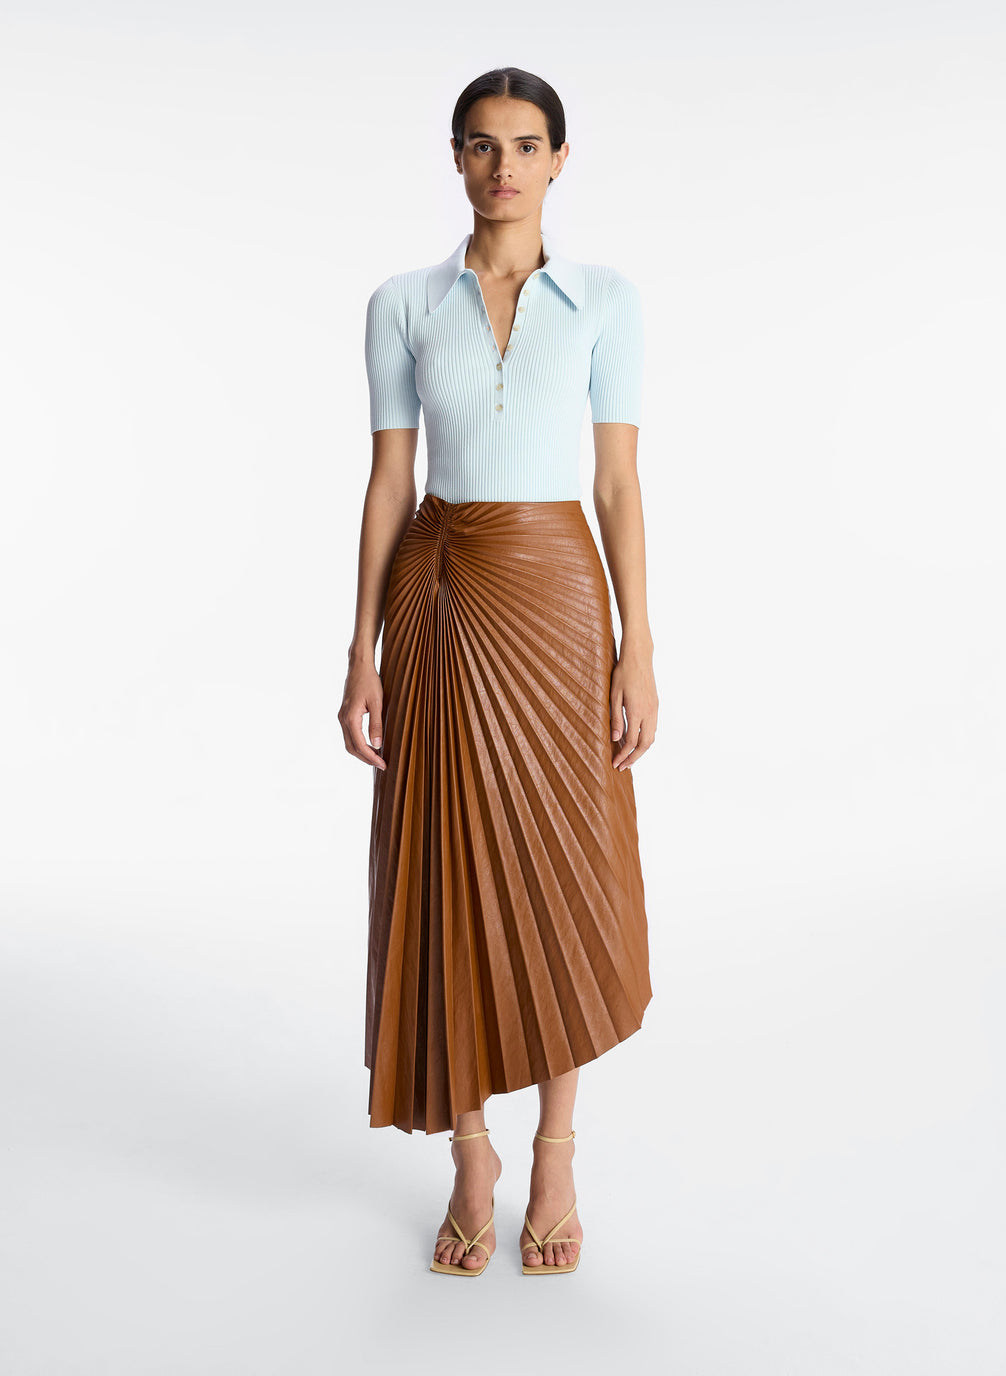 Tracy Vegan Leather Skirt